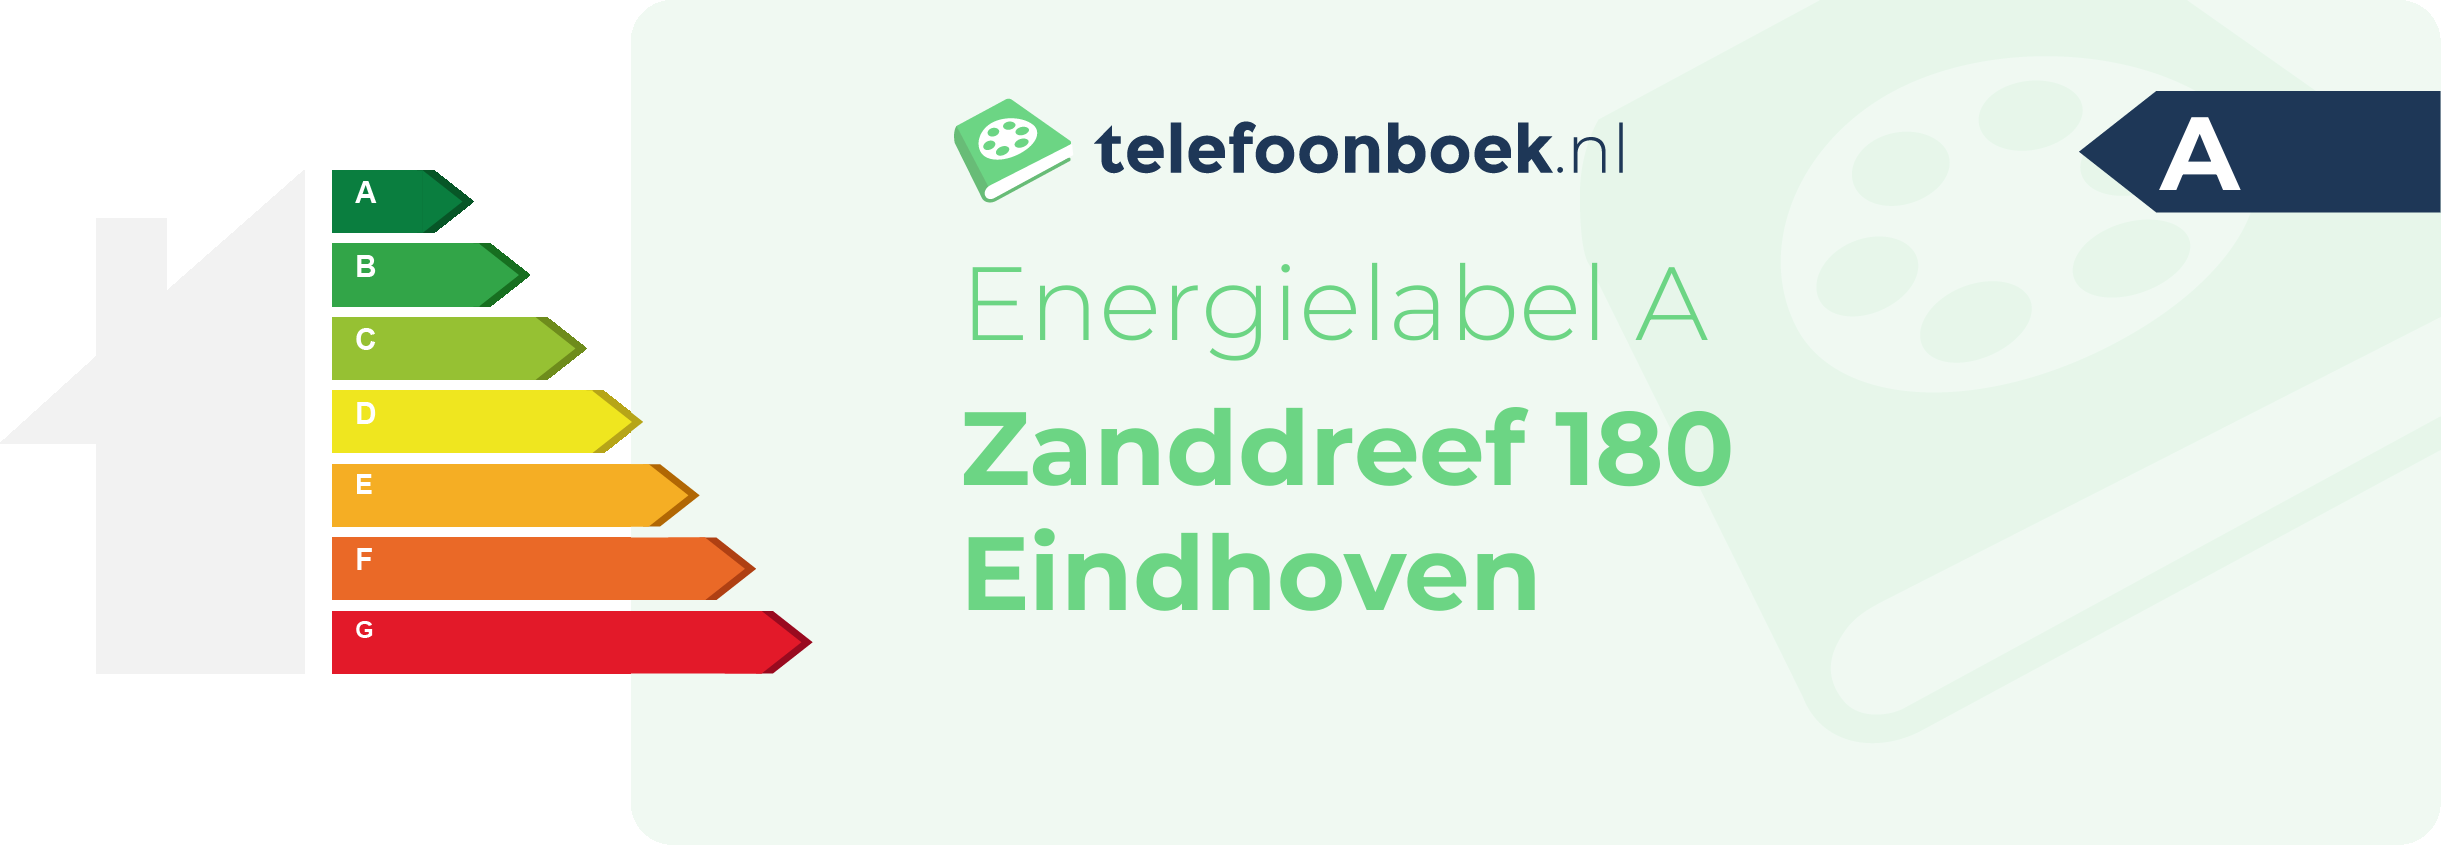 Energielabel Zanddreef 180 Eindhoven